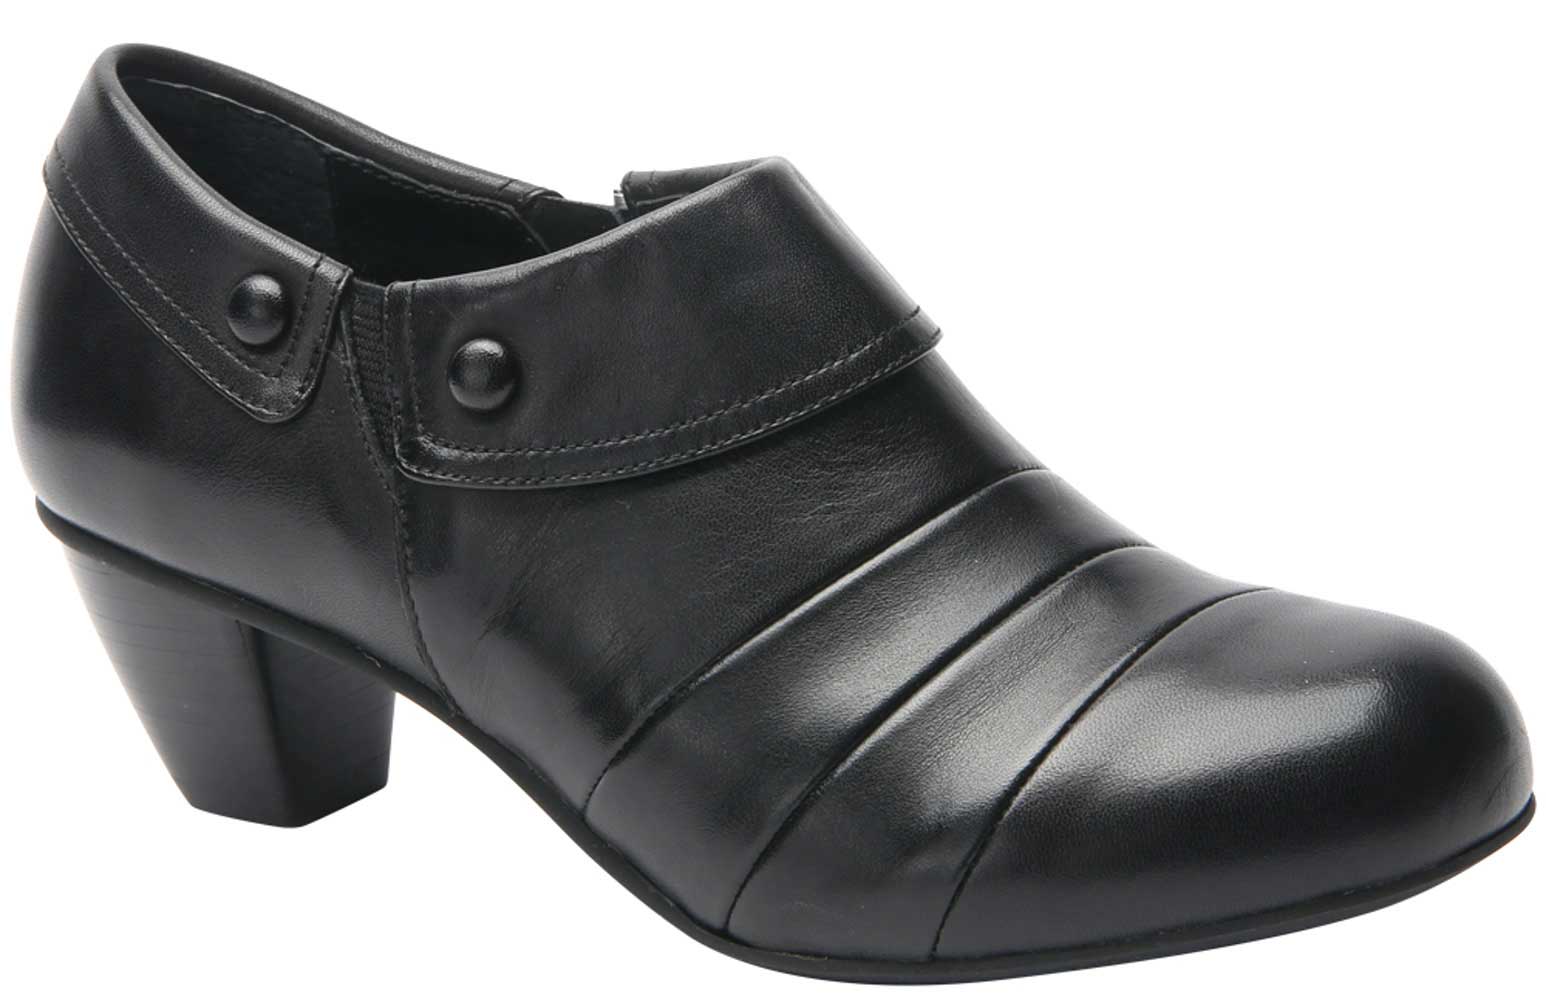 Drew Shoes Ashton 13340 - Women's Comfort Therapeutic Diabetic Dress Heels - Extra Depth For Orthotics